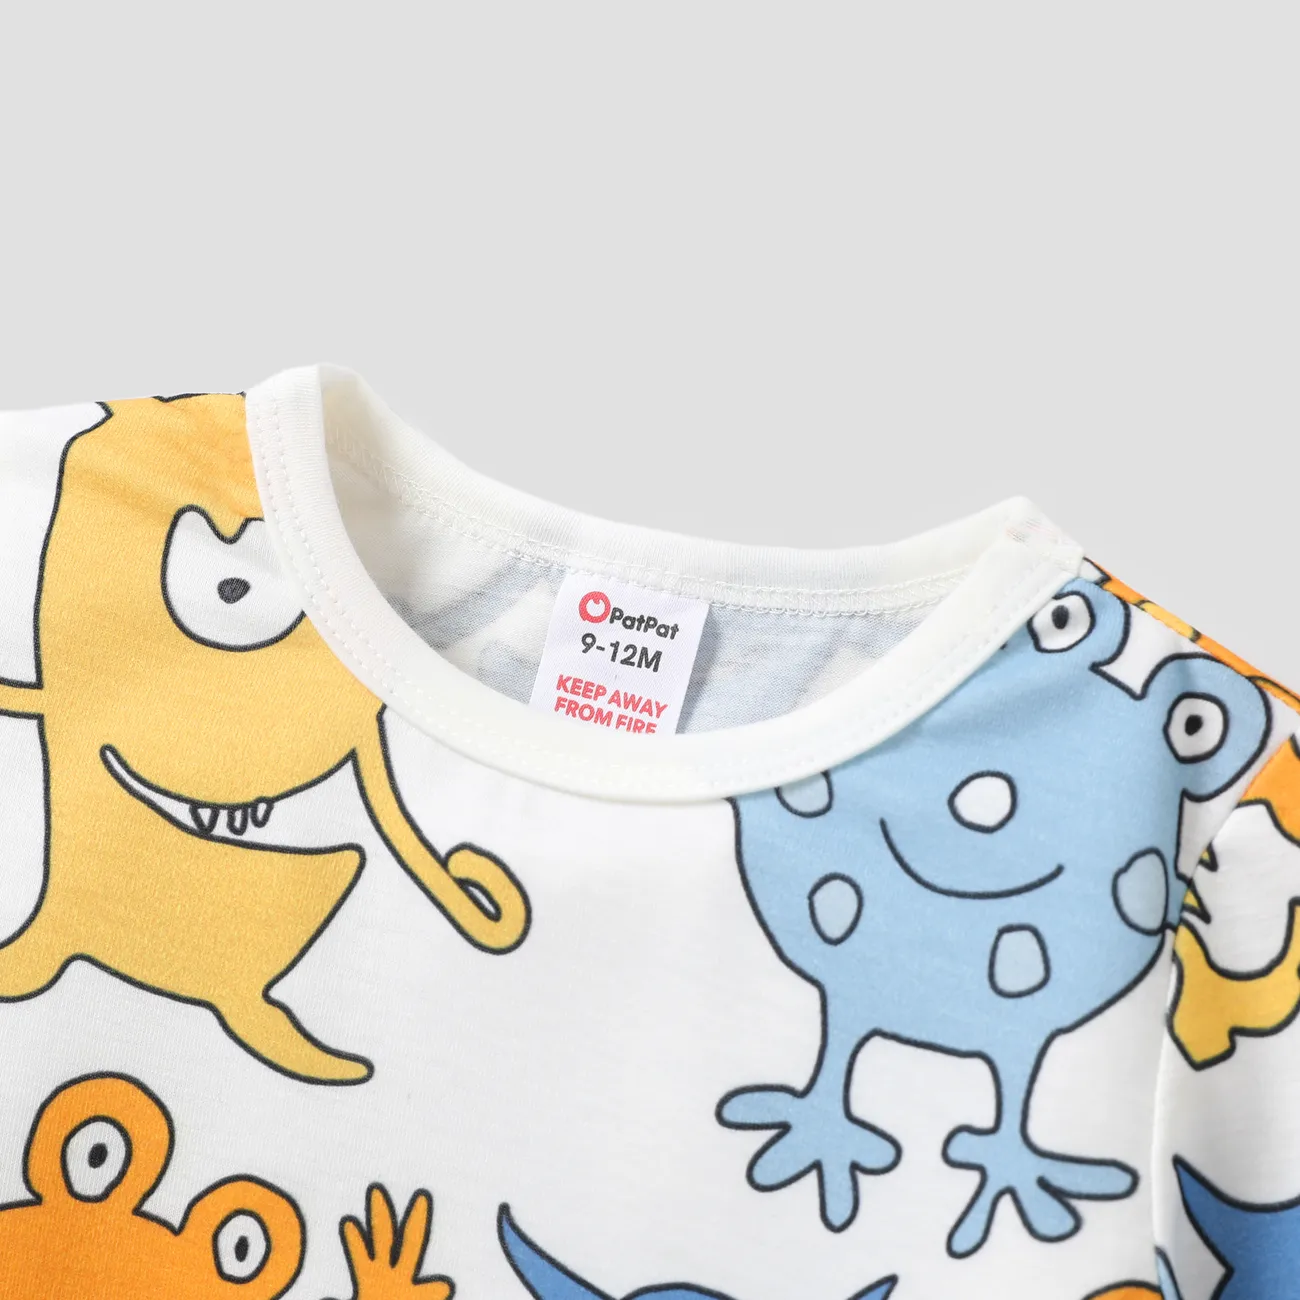 2-teiliges Basic-Pyjama-Set für Jungen - Polyester/Spandex, Normal Kategorie weiß big image 1